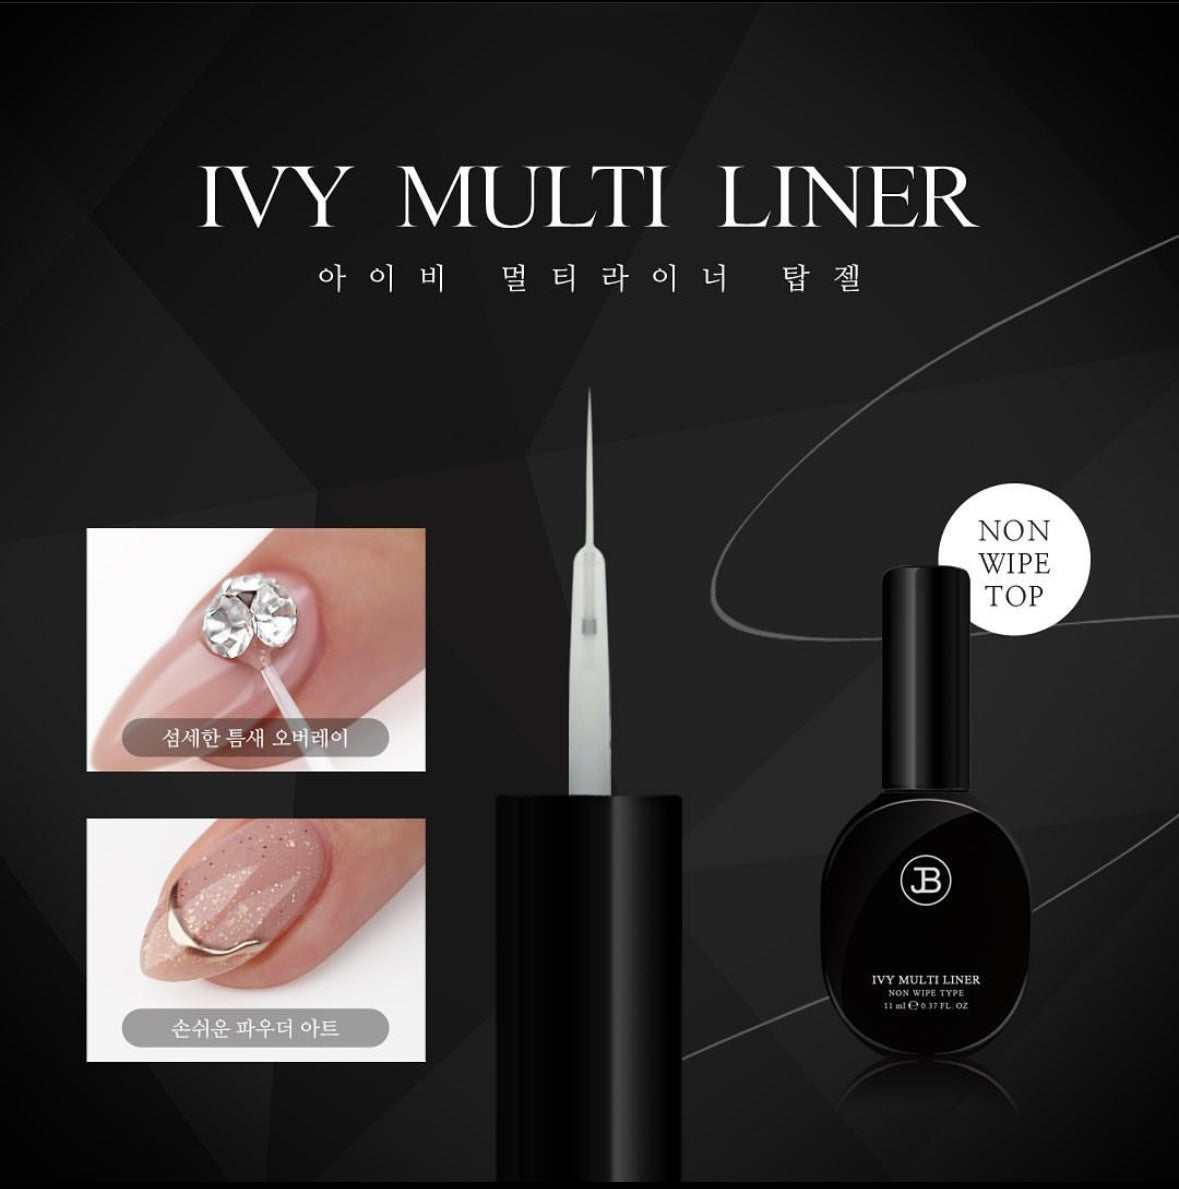 Jin B Ivy Multi Liner